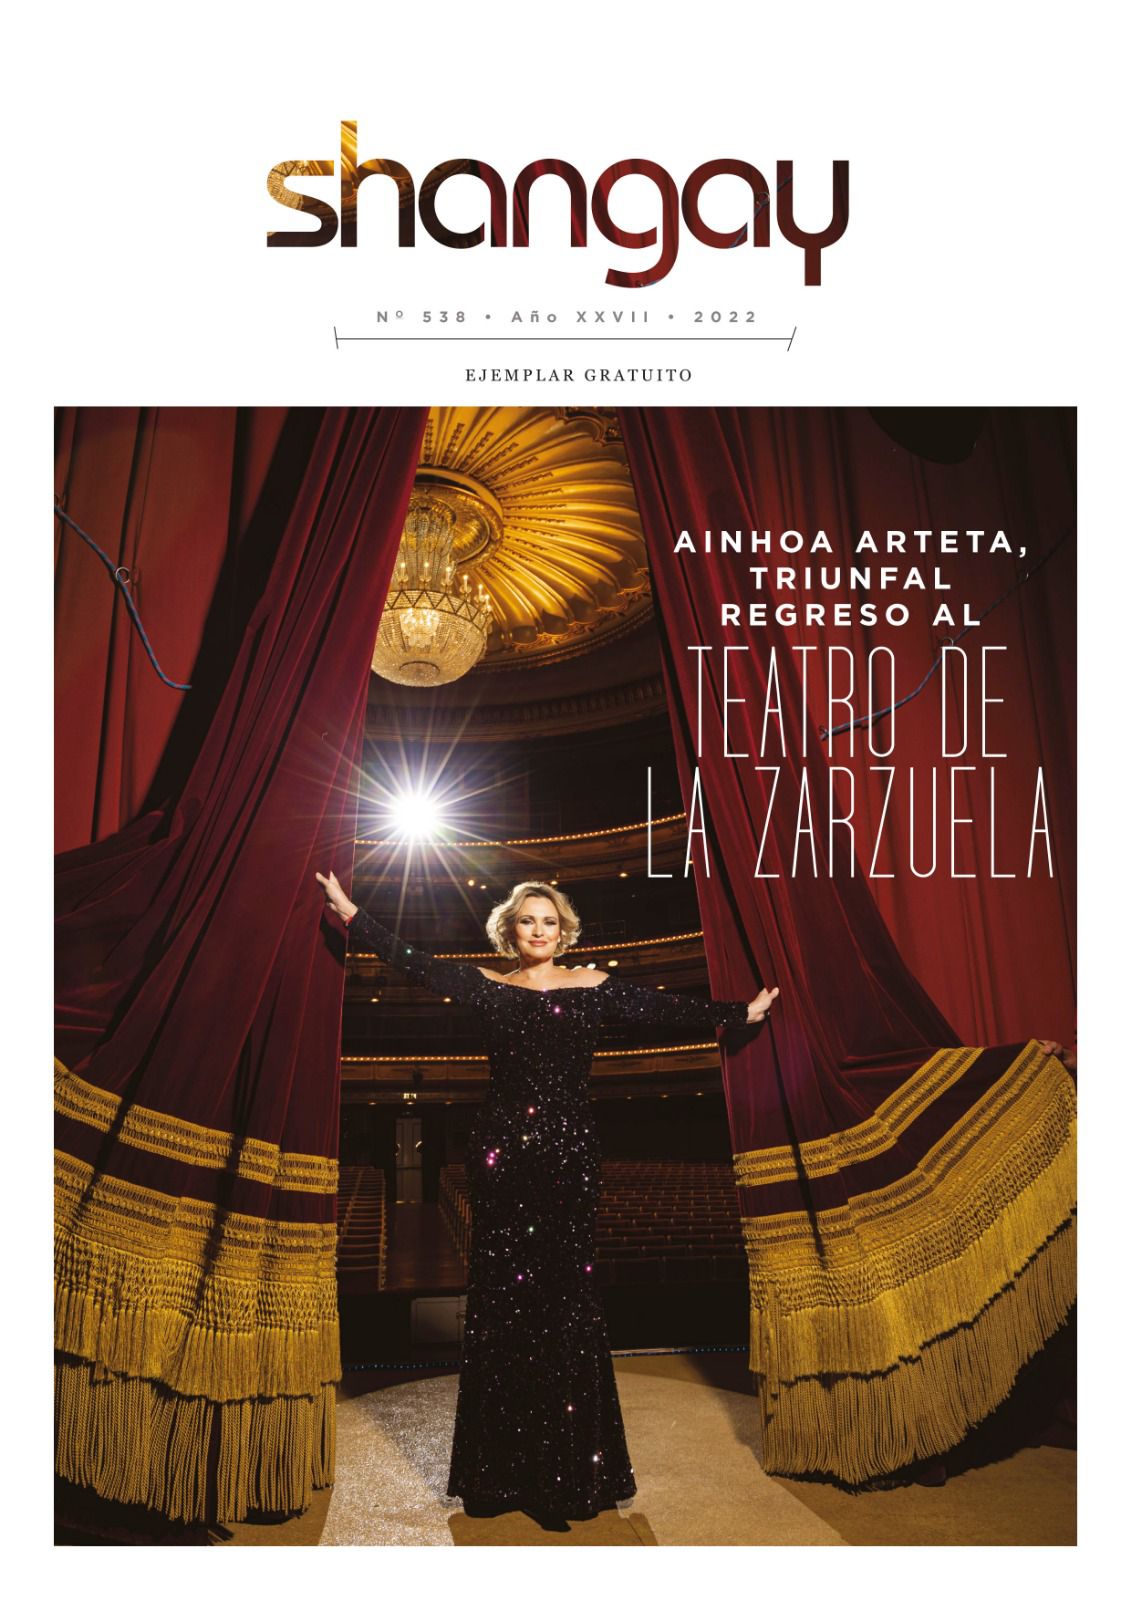 Ainhoa Arteta regresa al Teatro de La Zarzuela el 27 de febrero junto al tenor Ramón Vargas